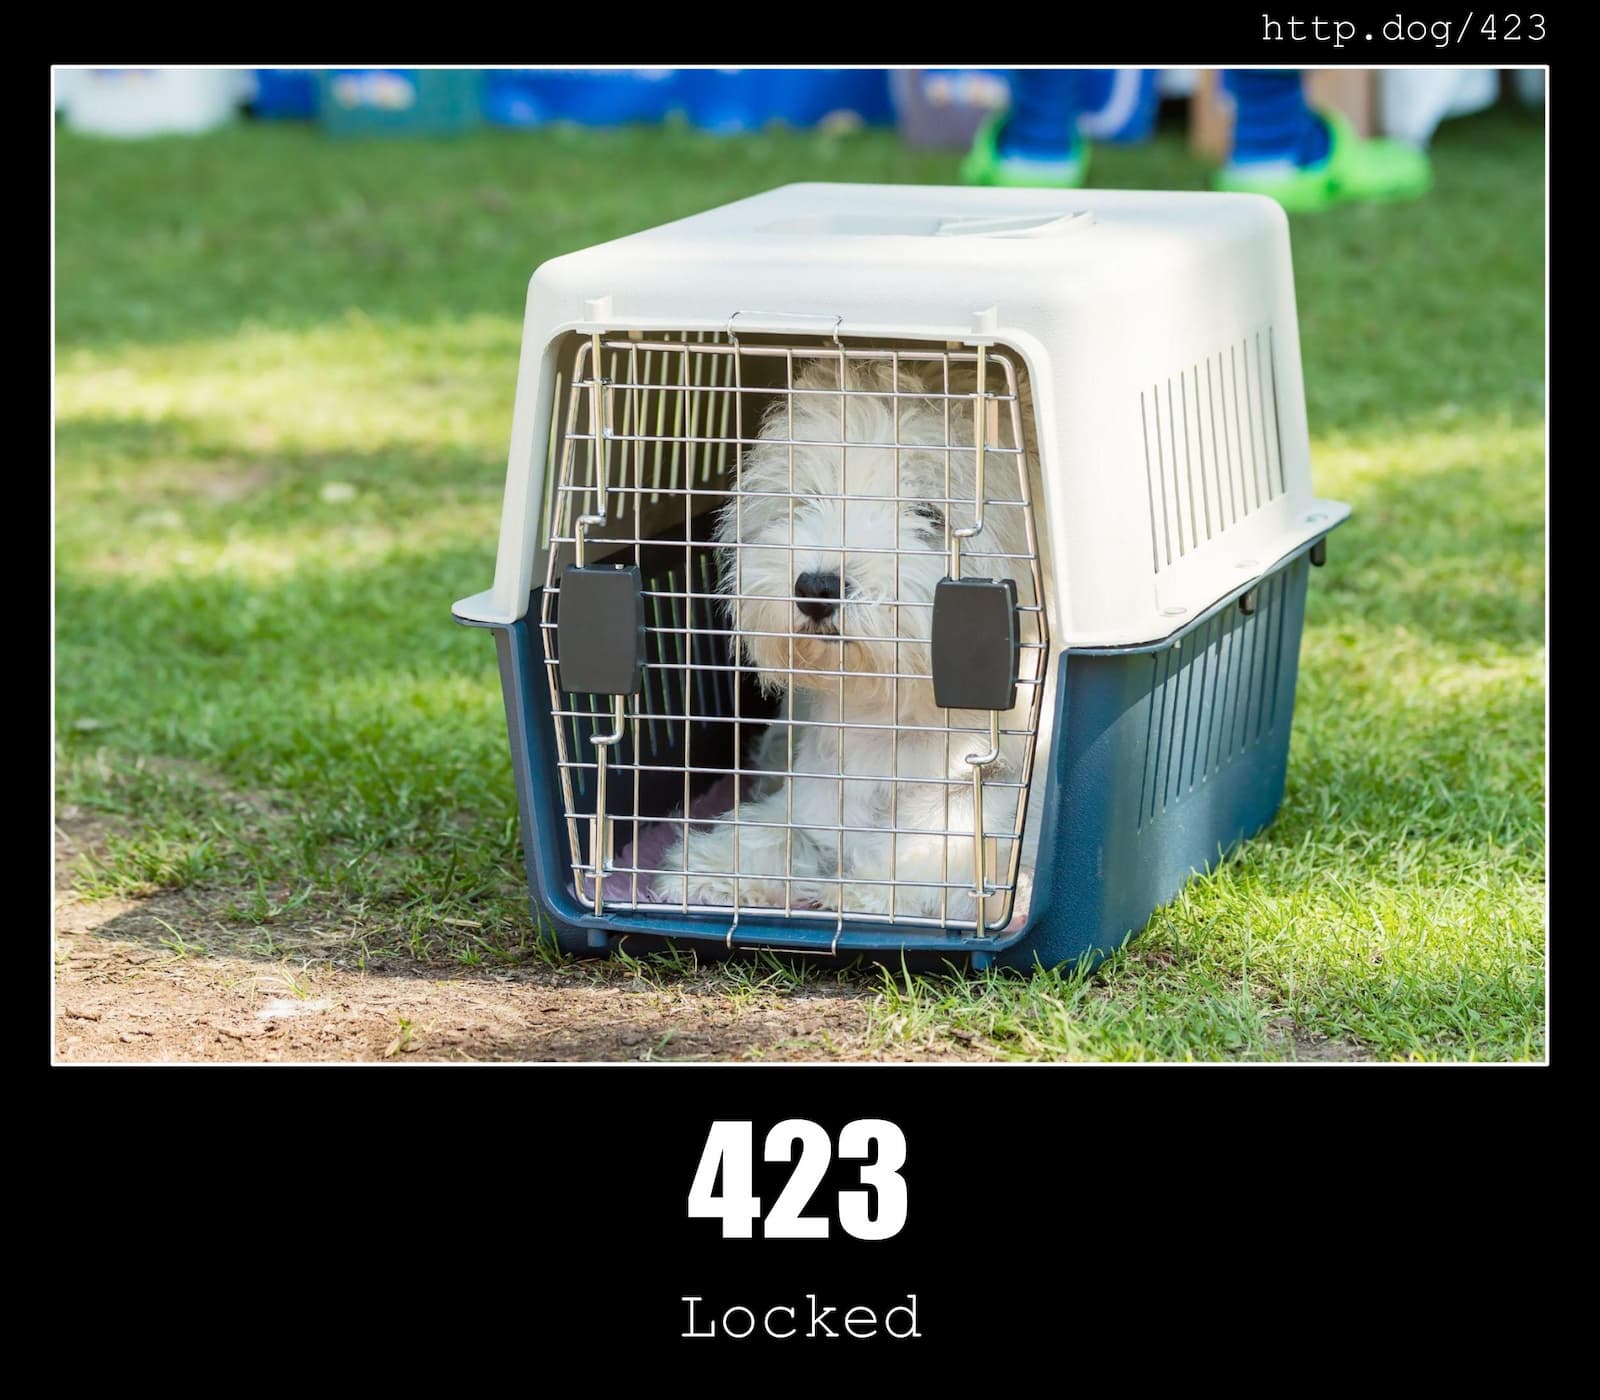 HTTP Status Code 423 Locked & Dogs